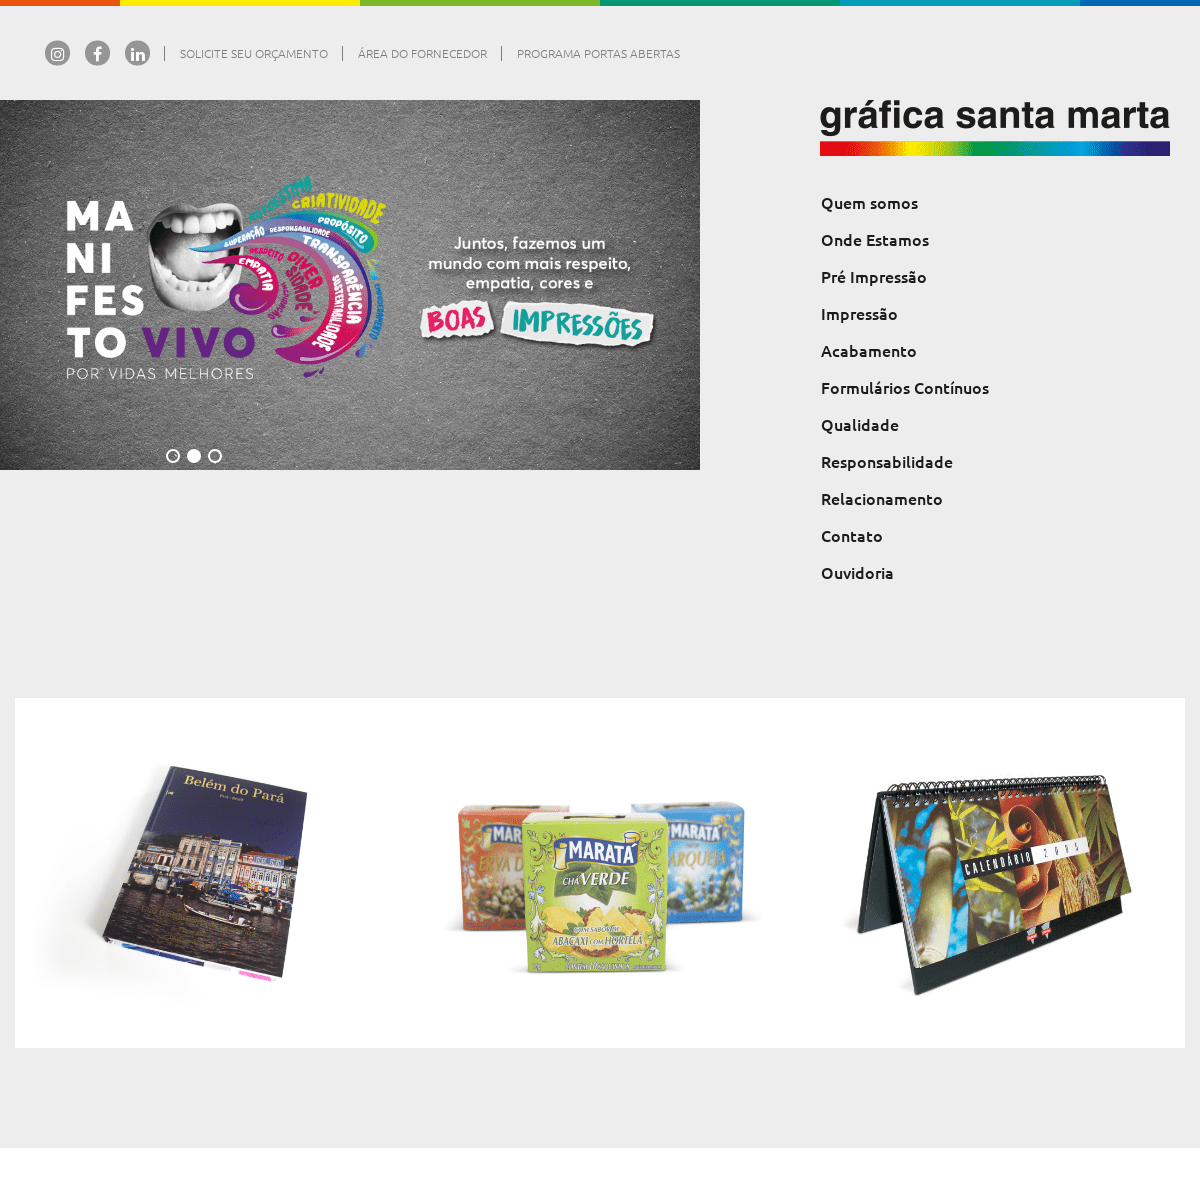 A complete backup of graficasantamarta.com.br